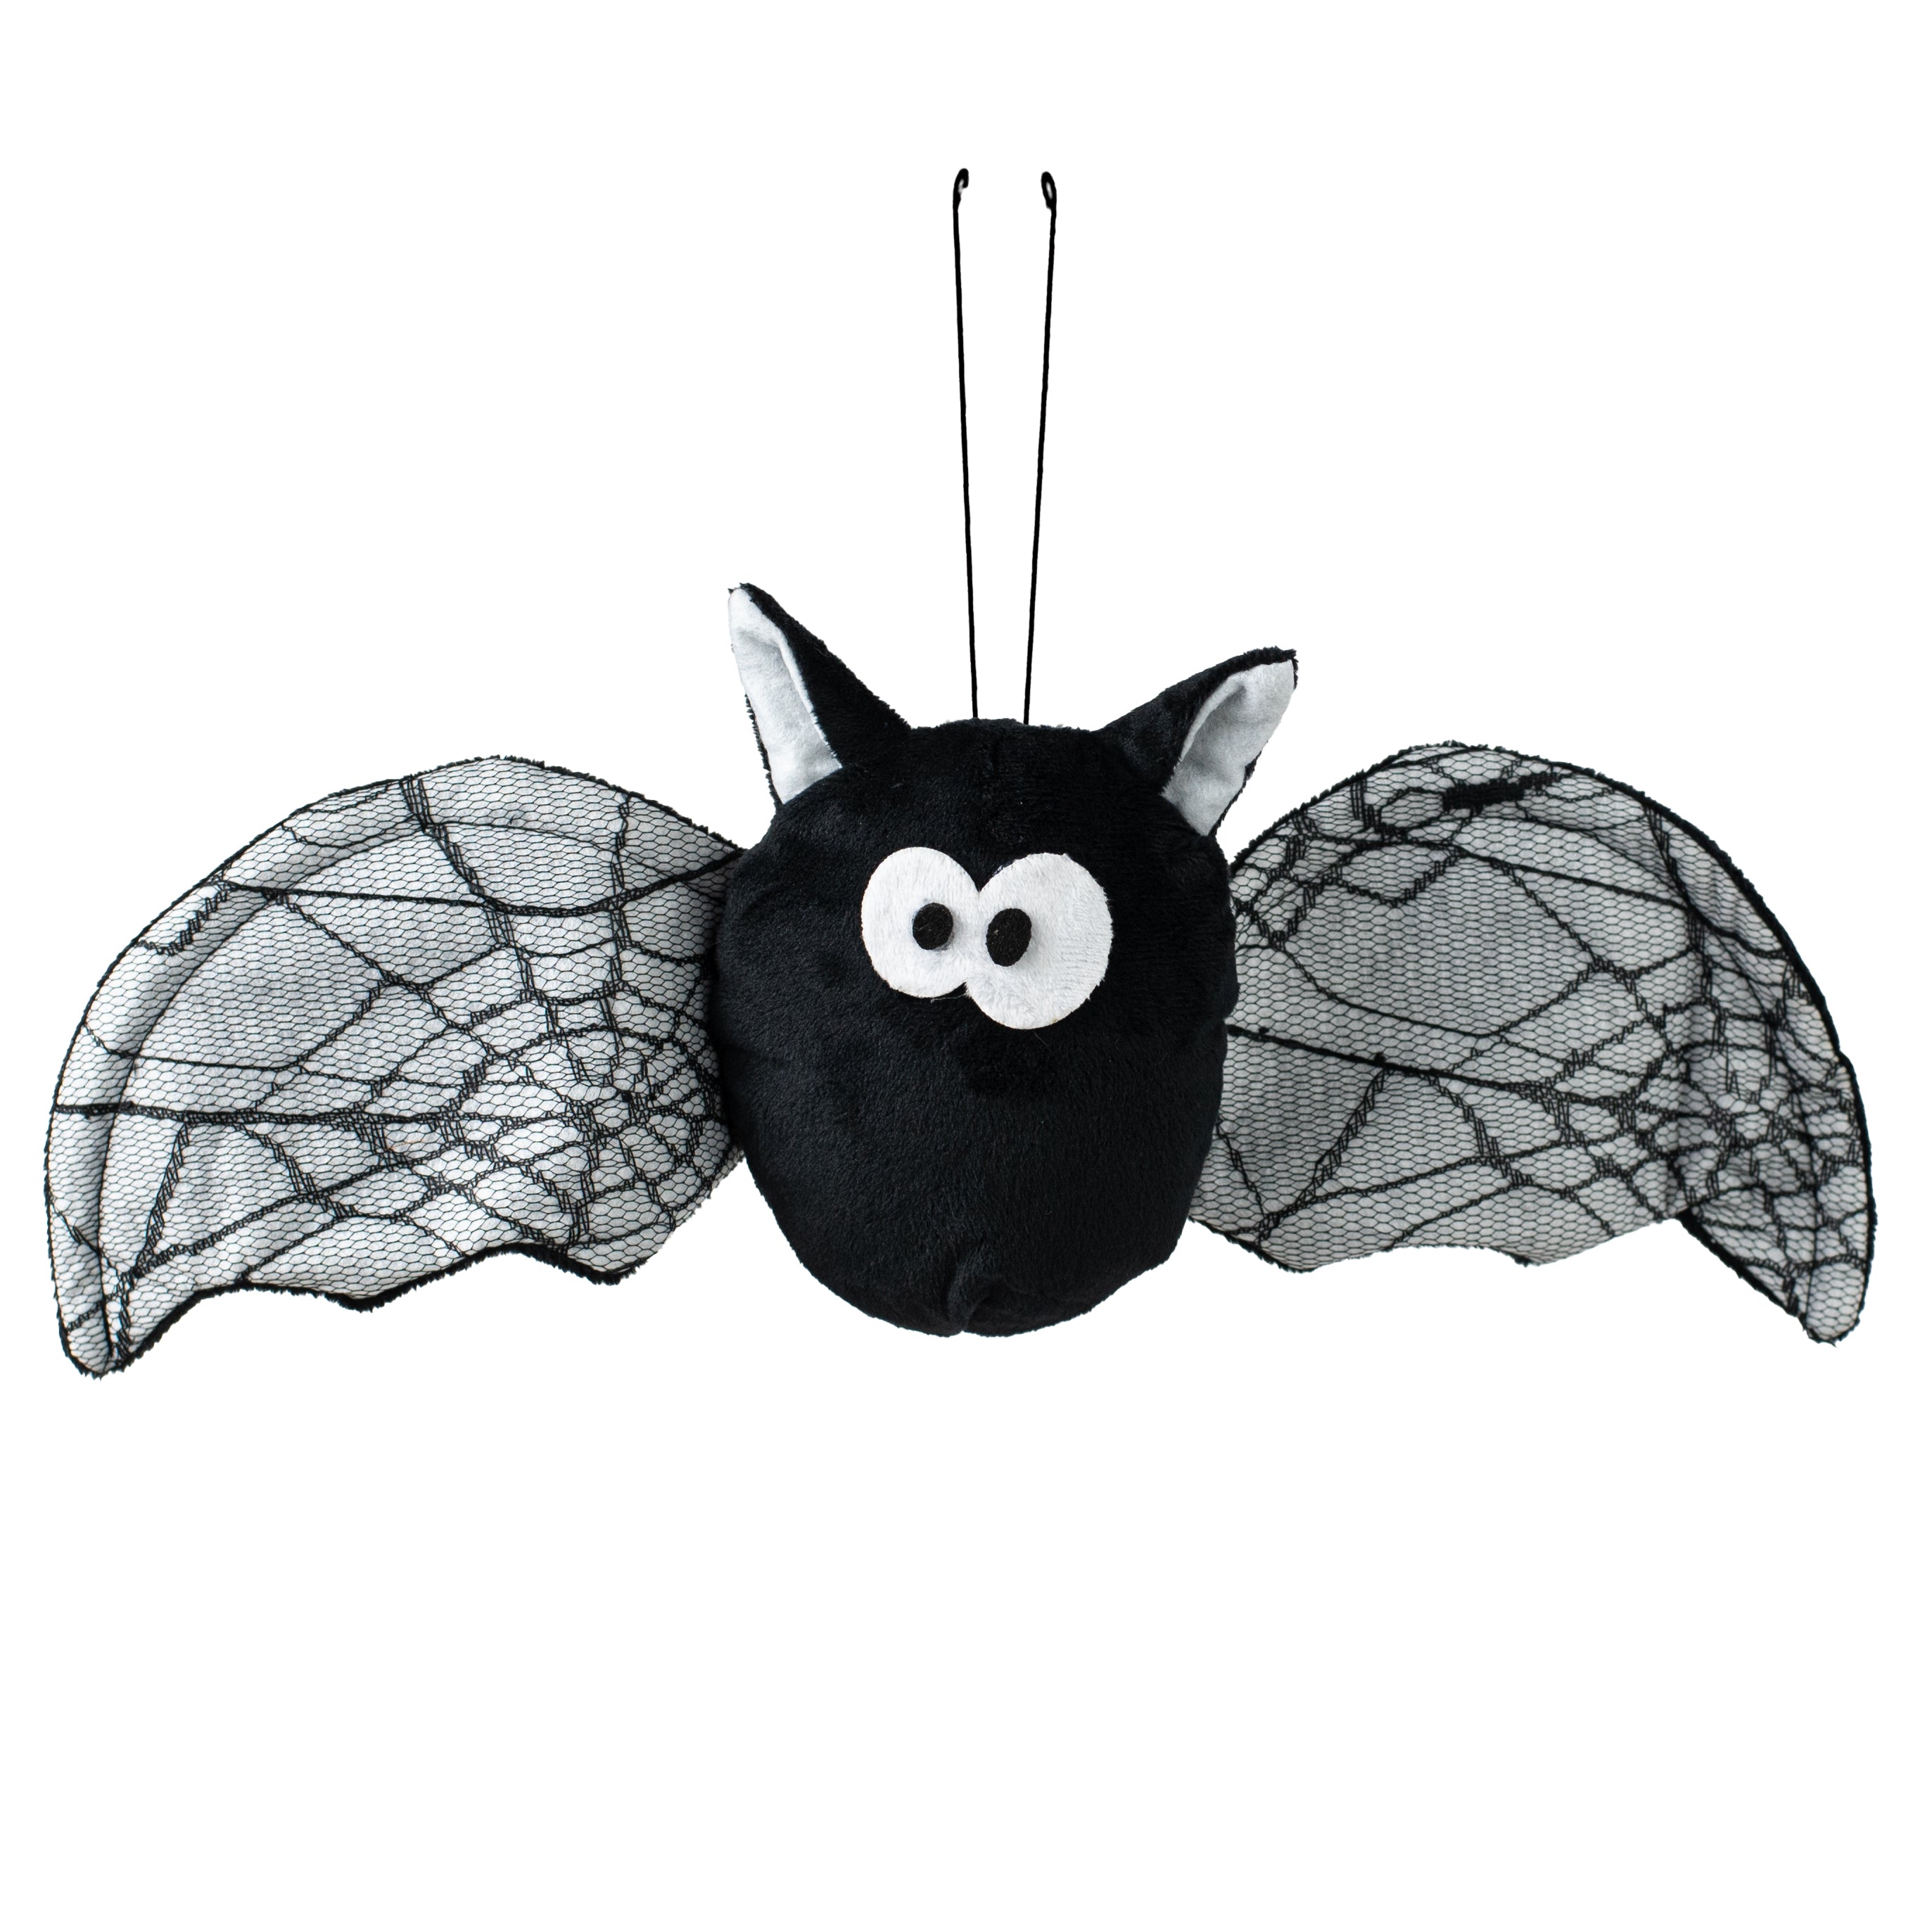 16" Plush Lace Wing Bat: Black & White